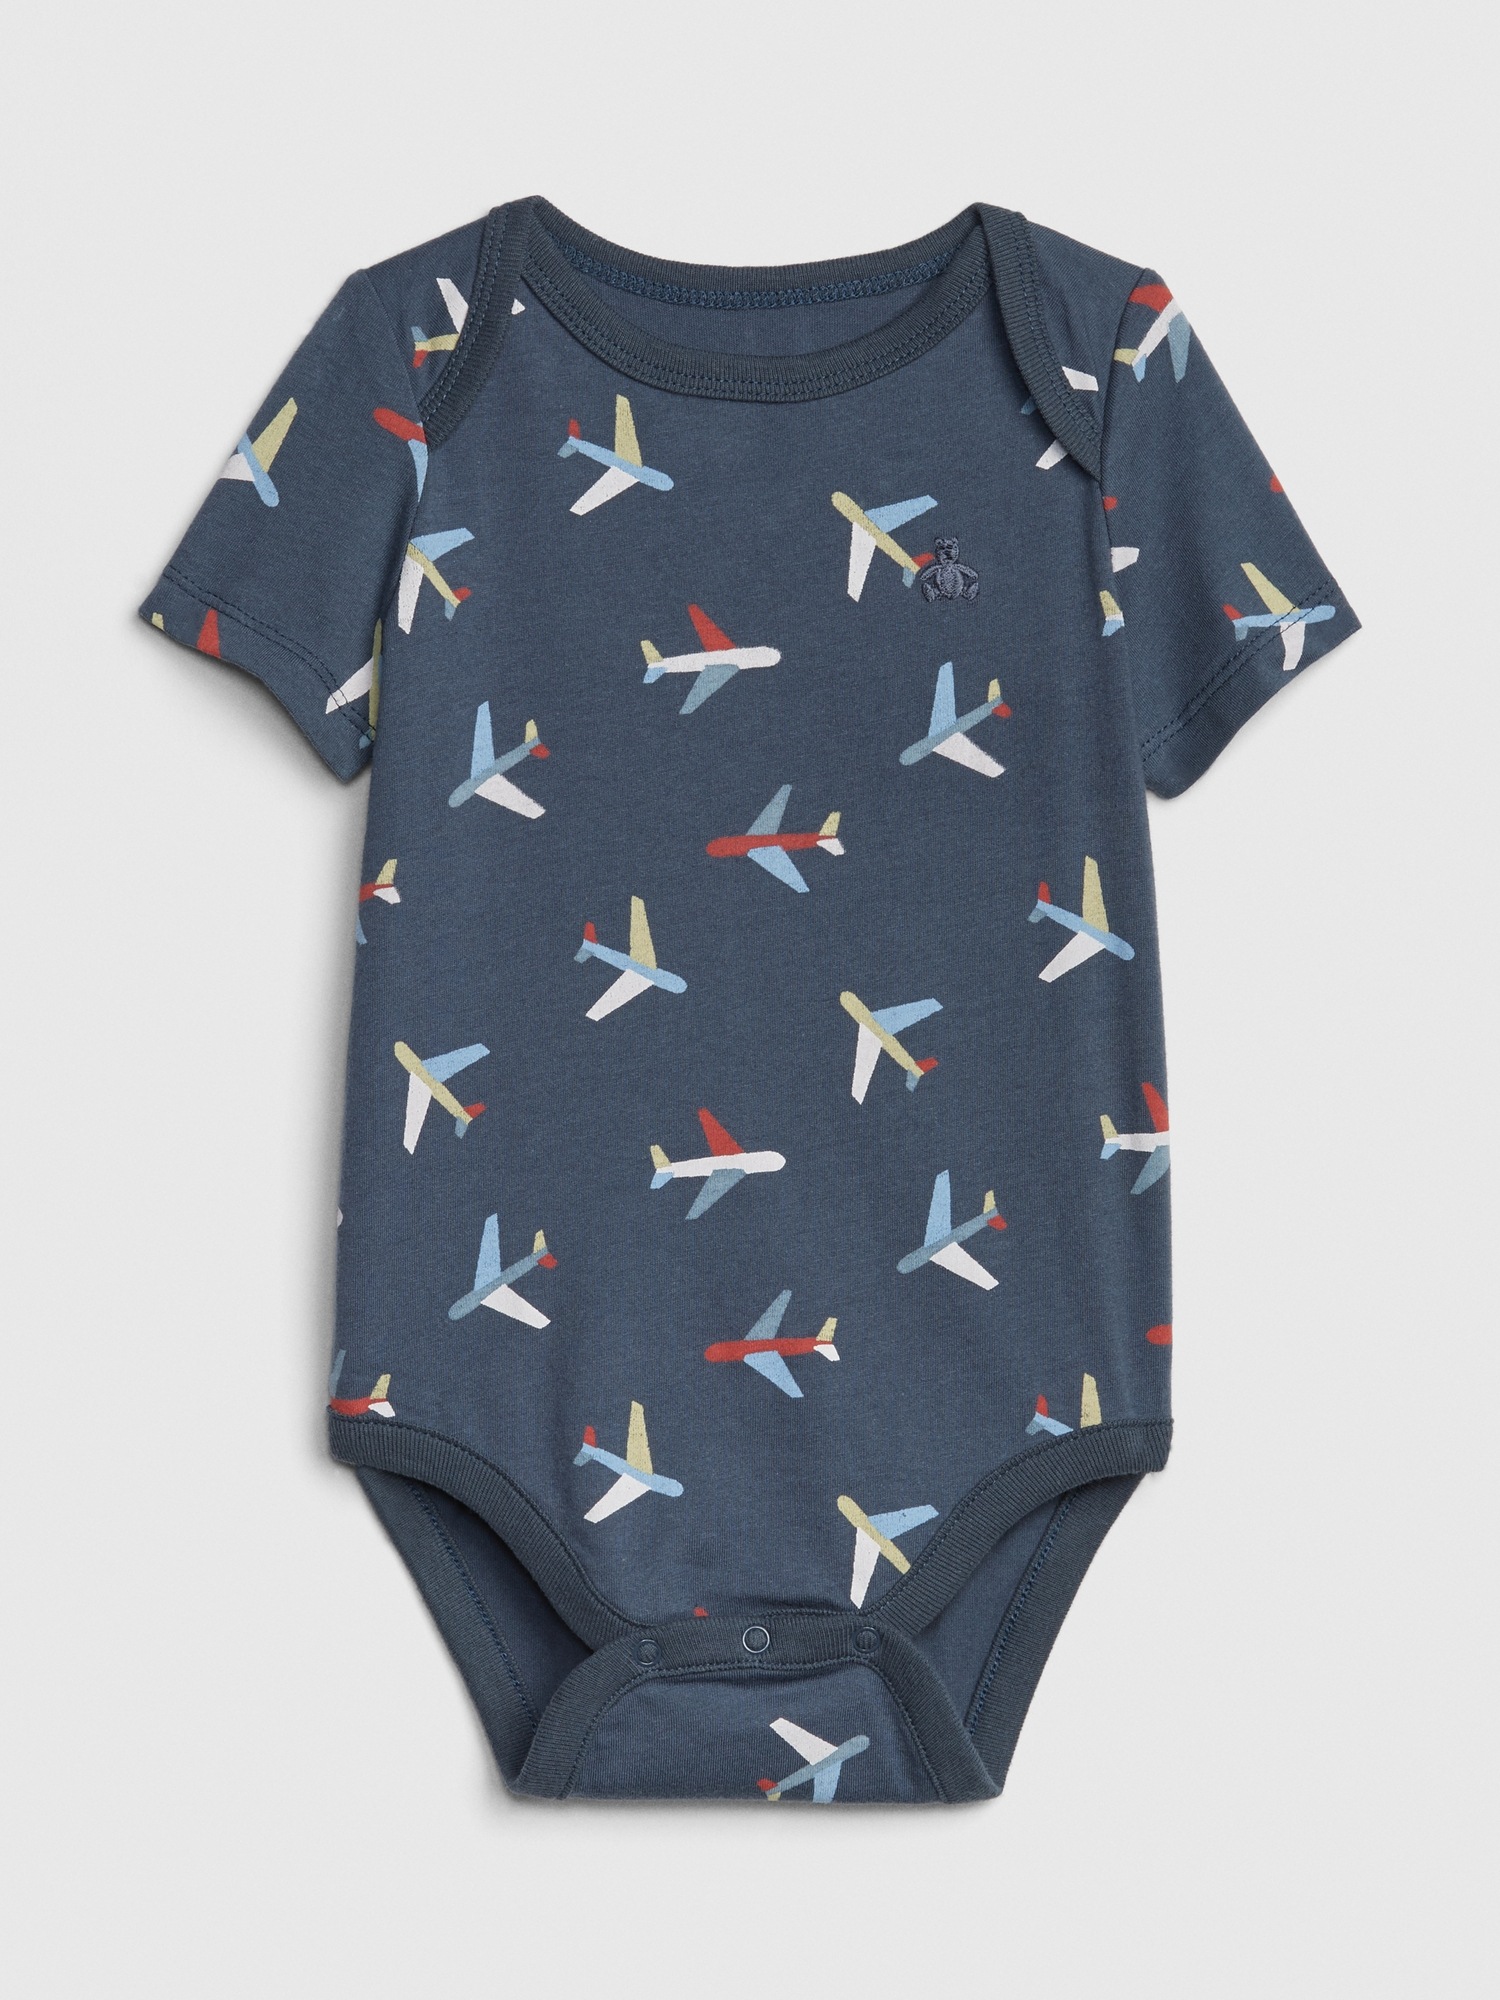 Baby Shark Big Graphic Cotton Tank Bodysuit for Baby Boy/Girl